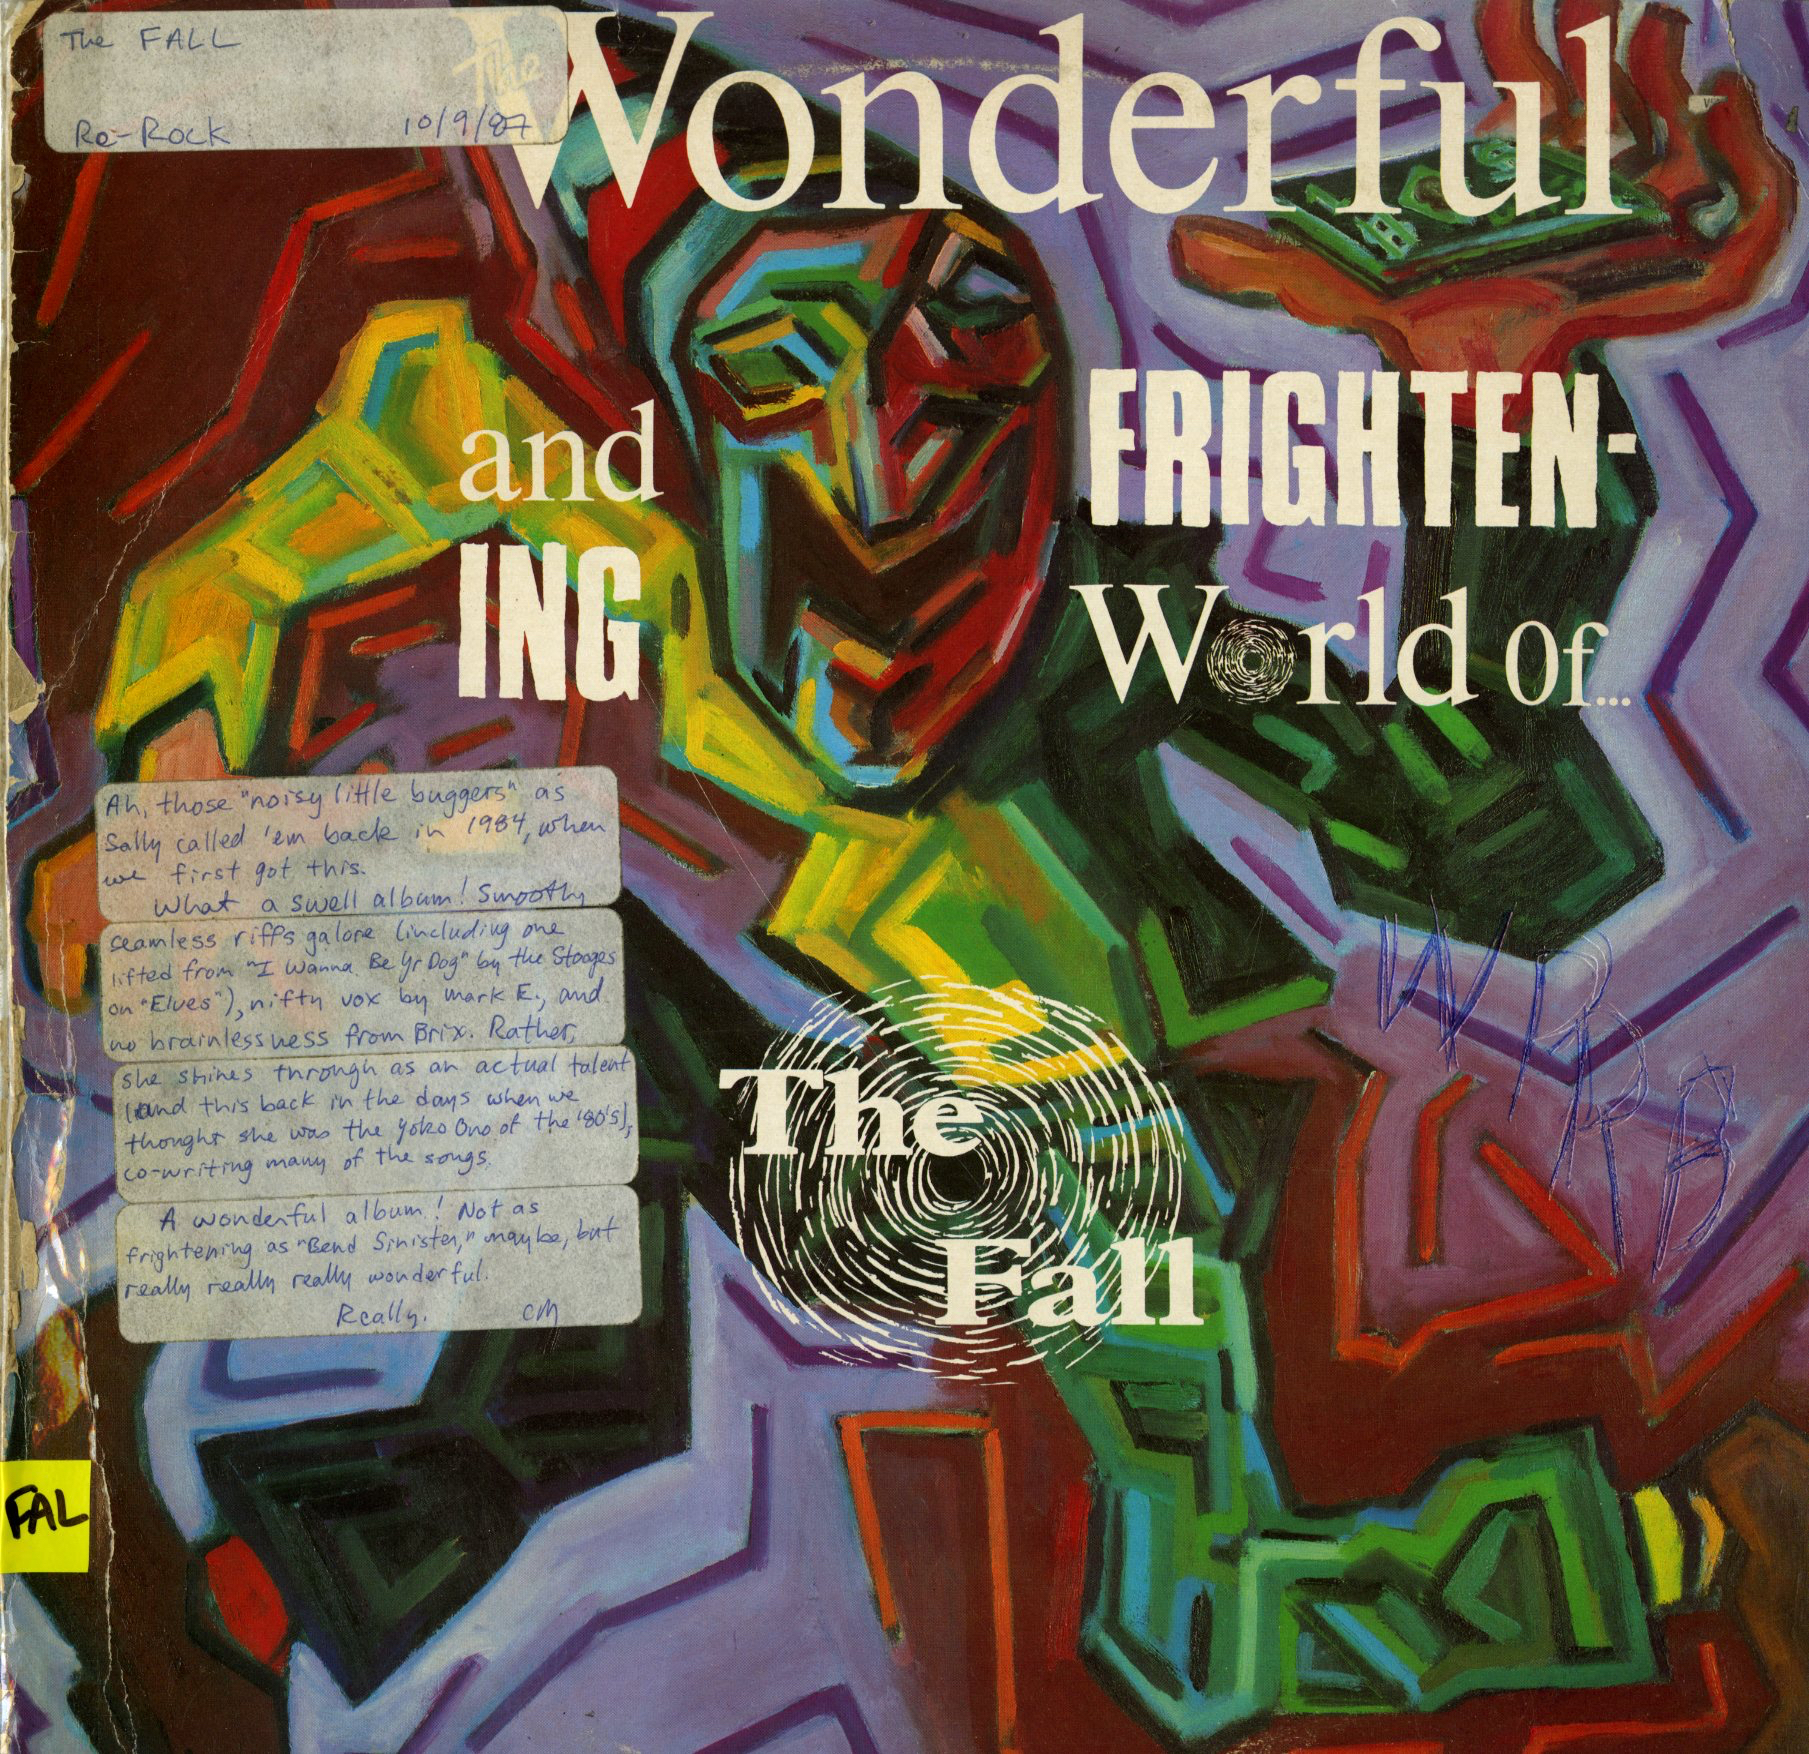 The_Fall_-_Wonderful_Frightening_World